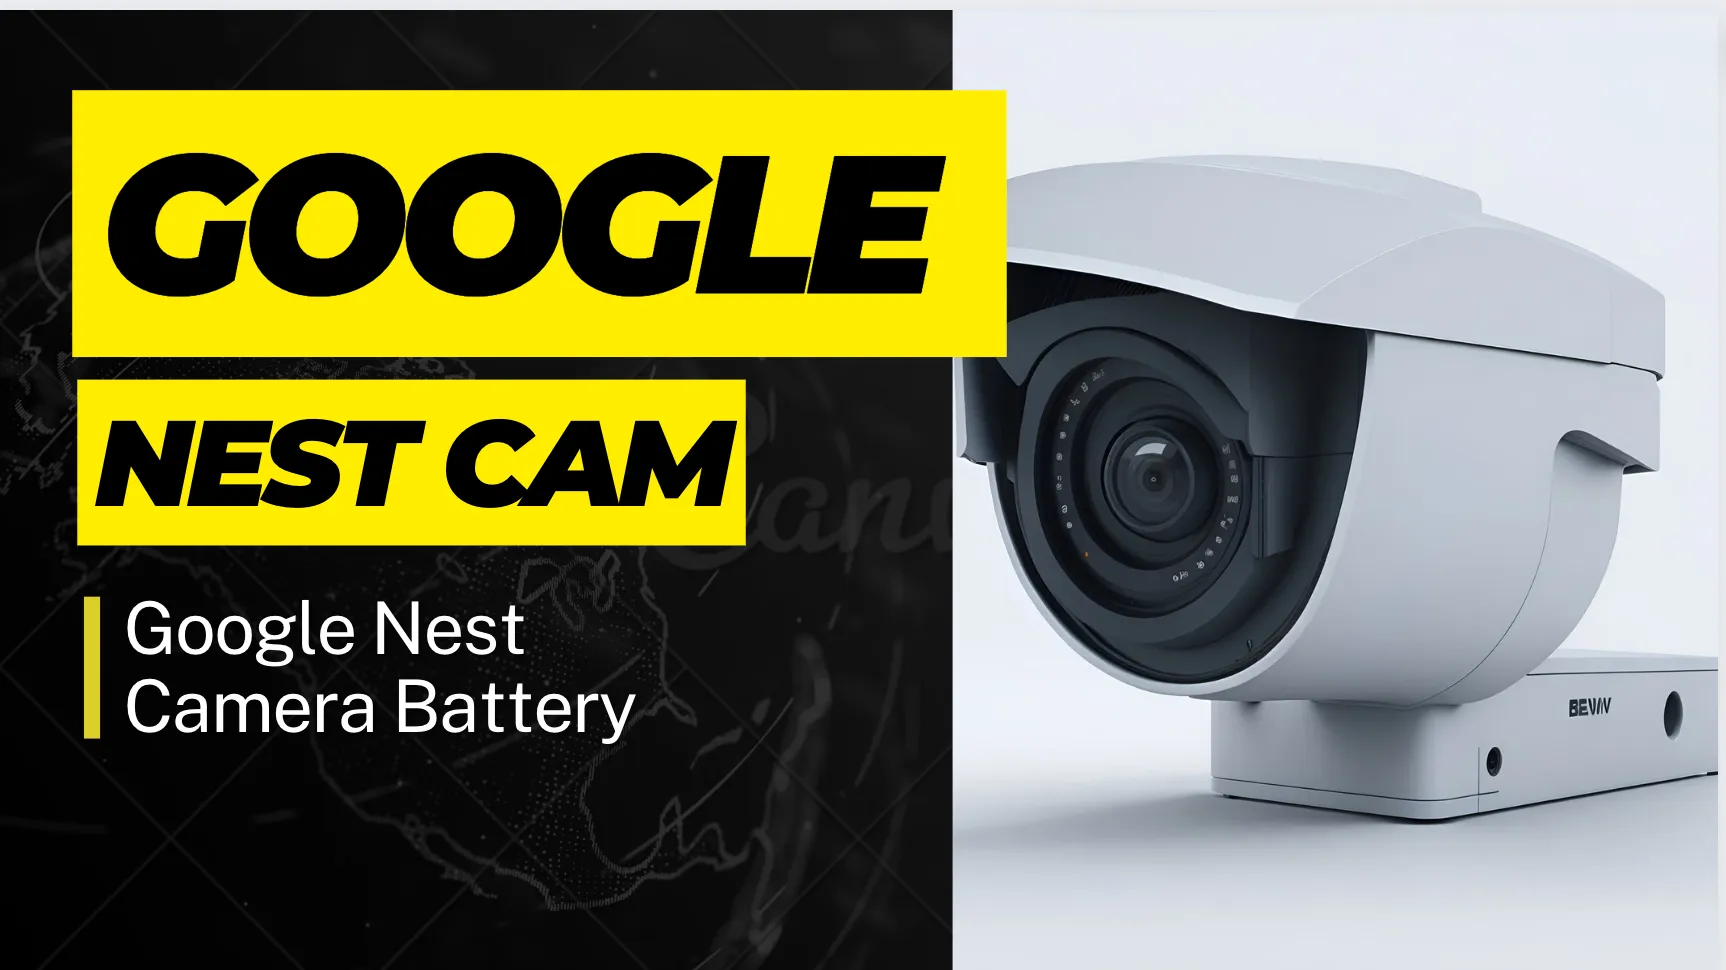 Google’s Nest Cam Returns to the Smart Home Security Arena